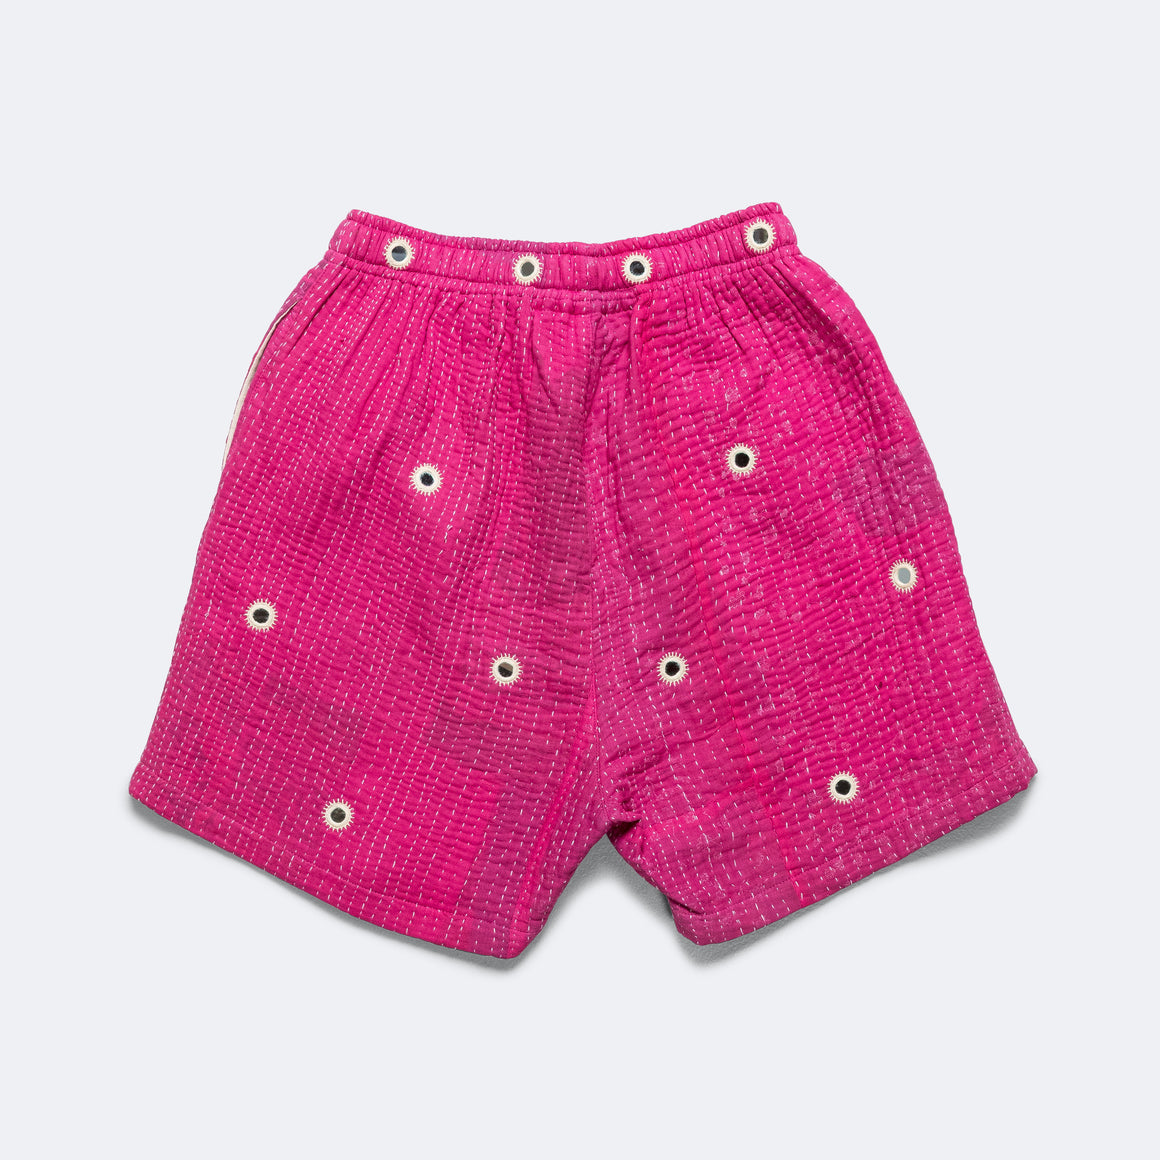 Kartik Research - Vintage Kantha Overdye Shorts - Pink/Mirrors - UP THERE